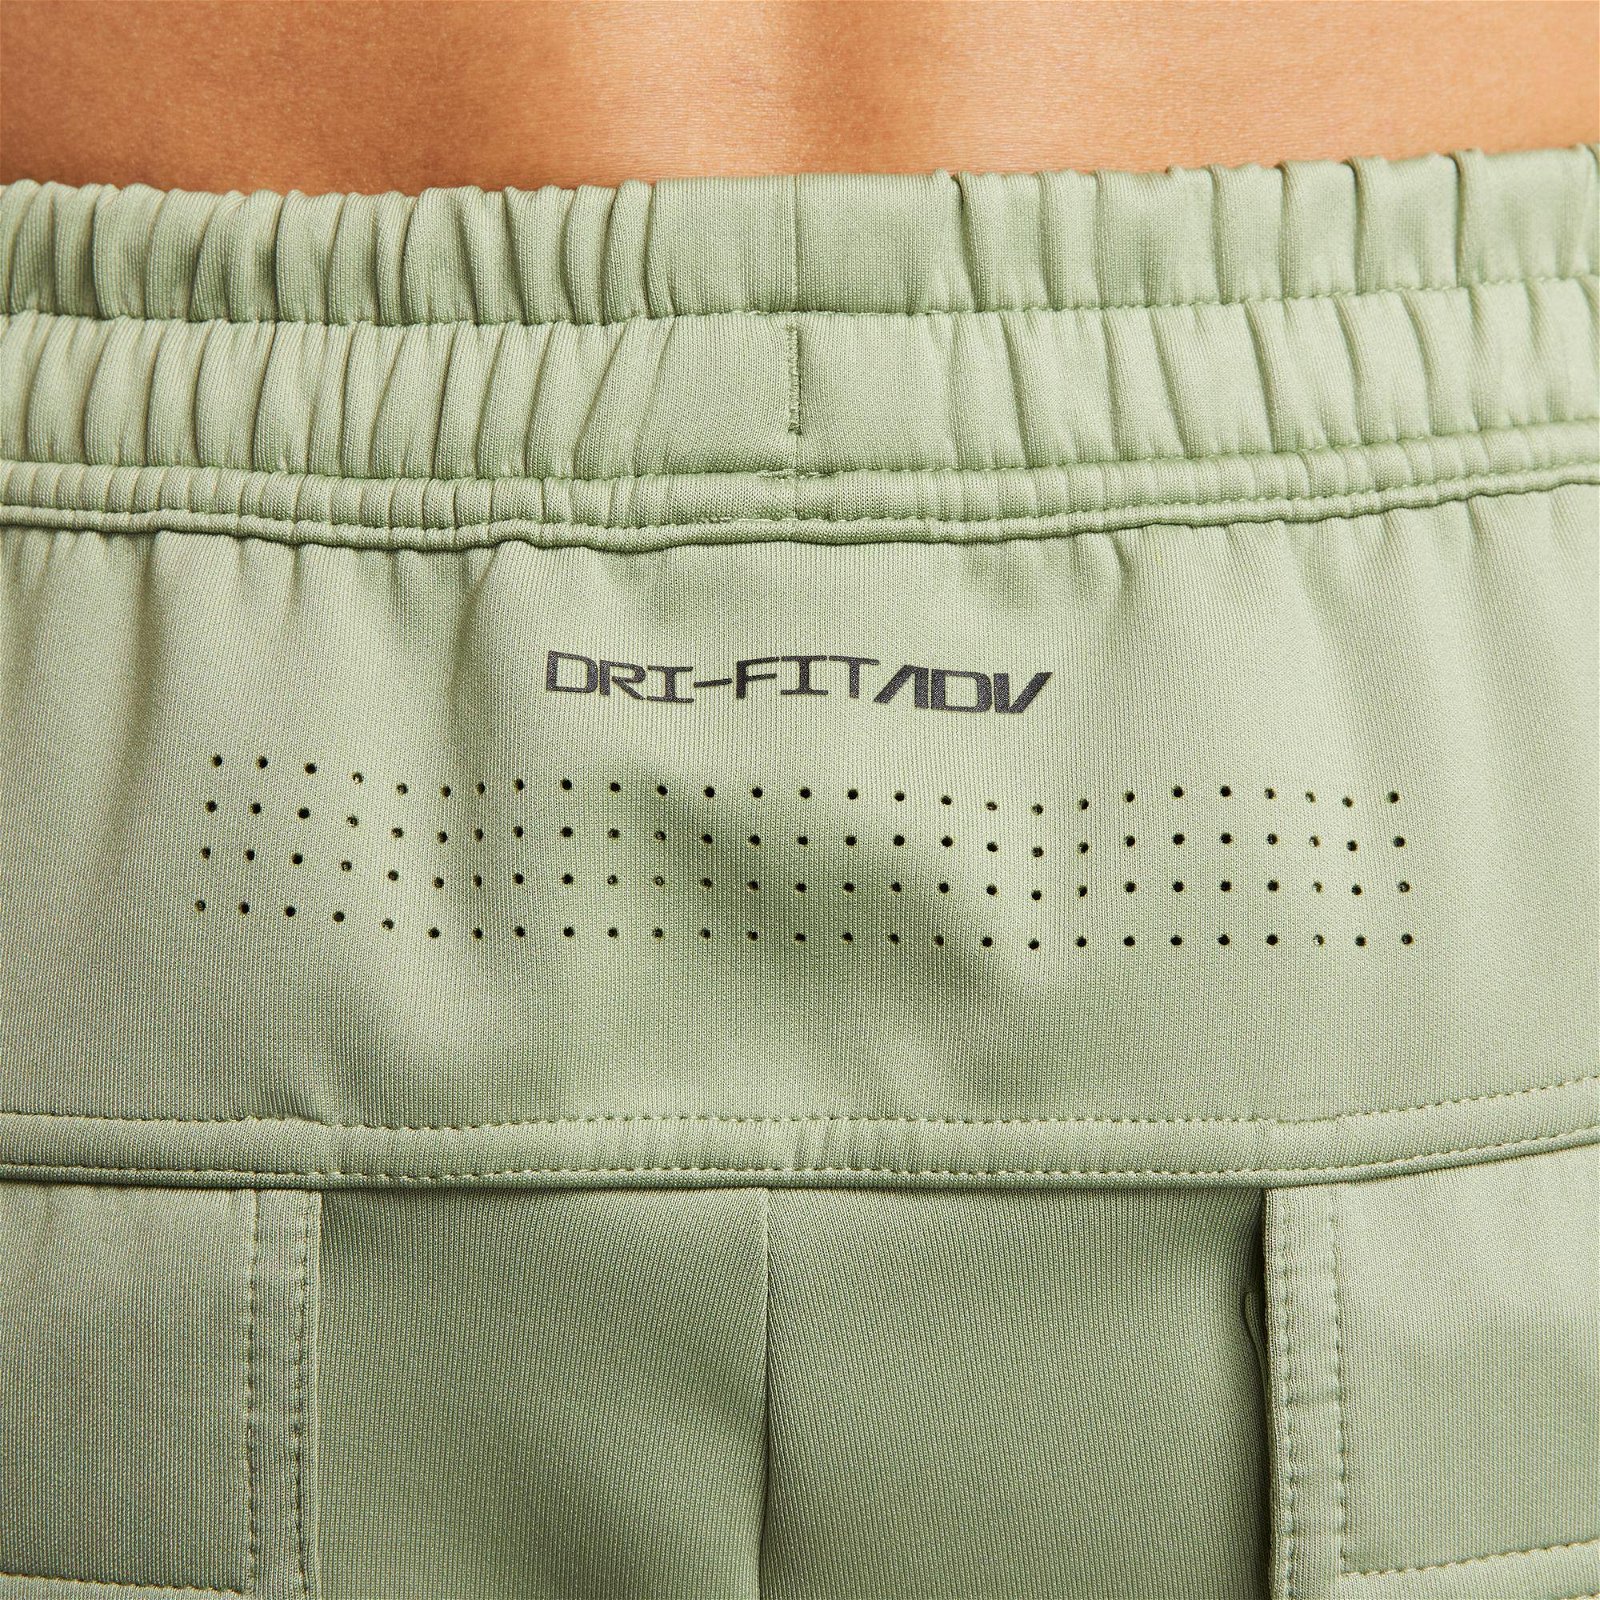 Nike Dri-Fit Adventure Aps Knit Short Erkek Yeşil Şort